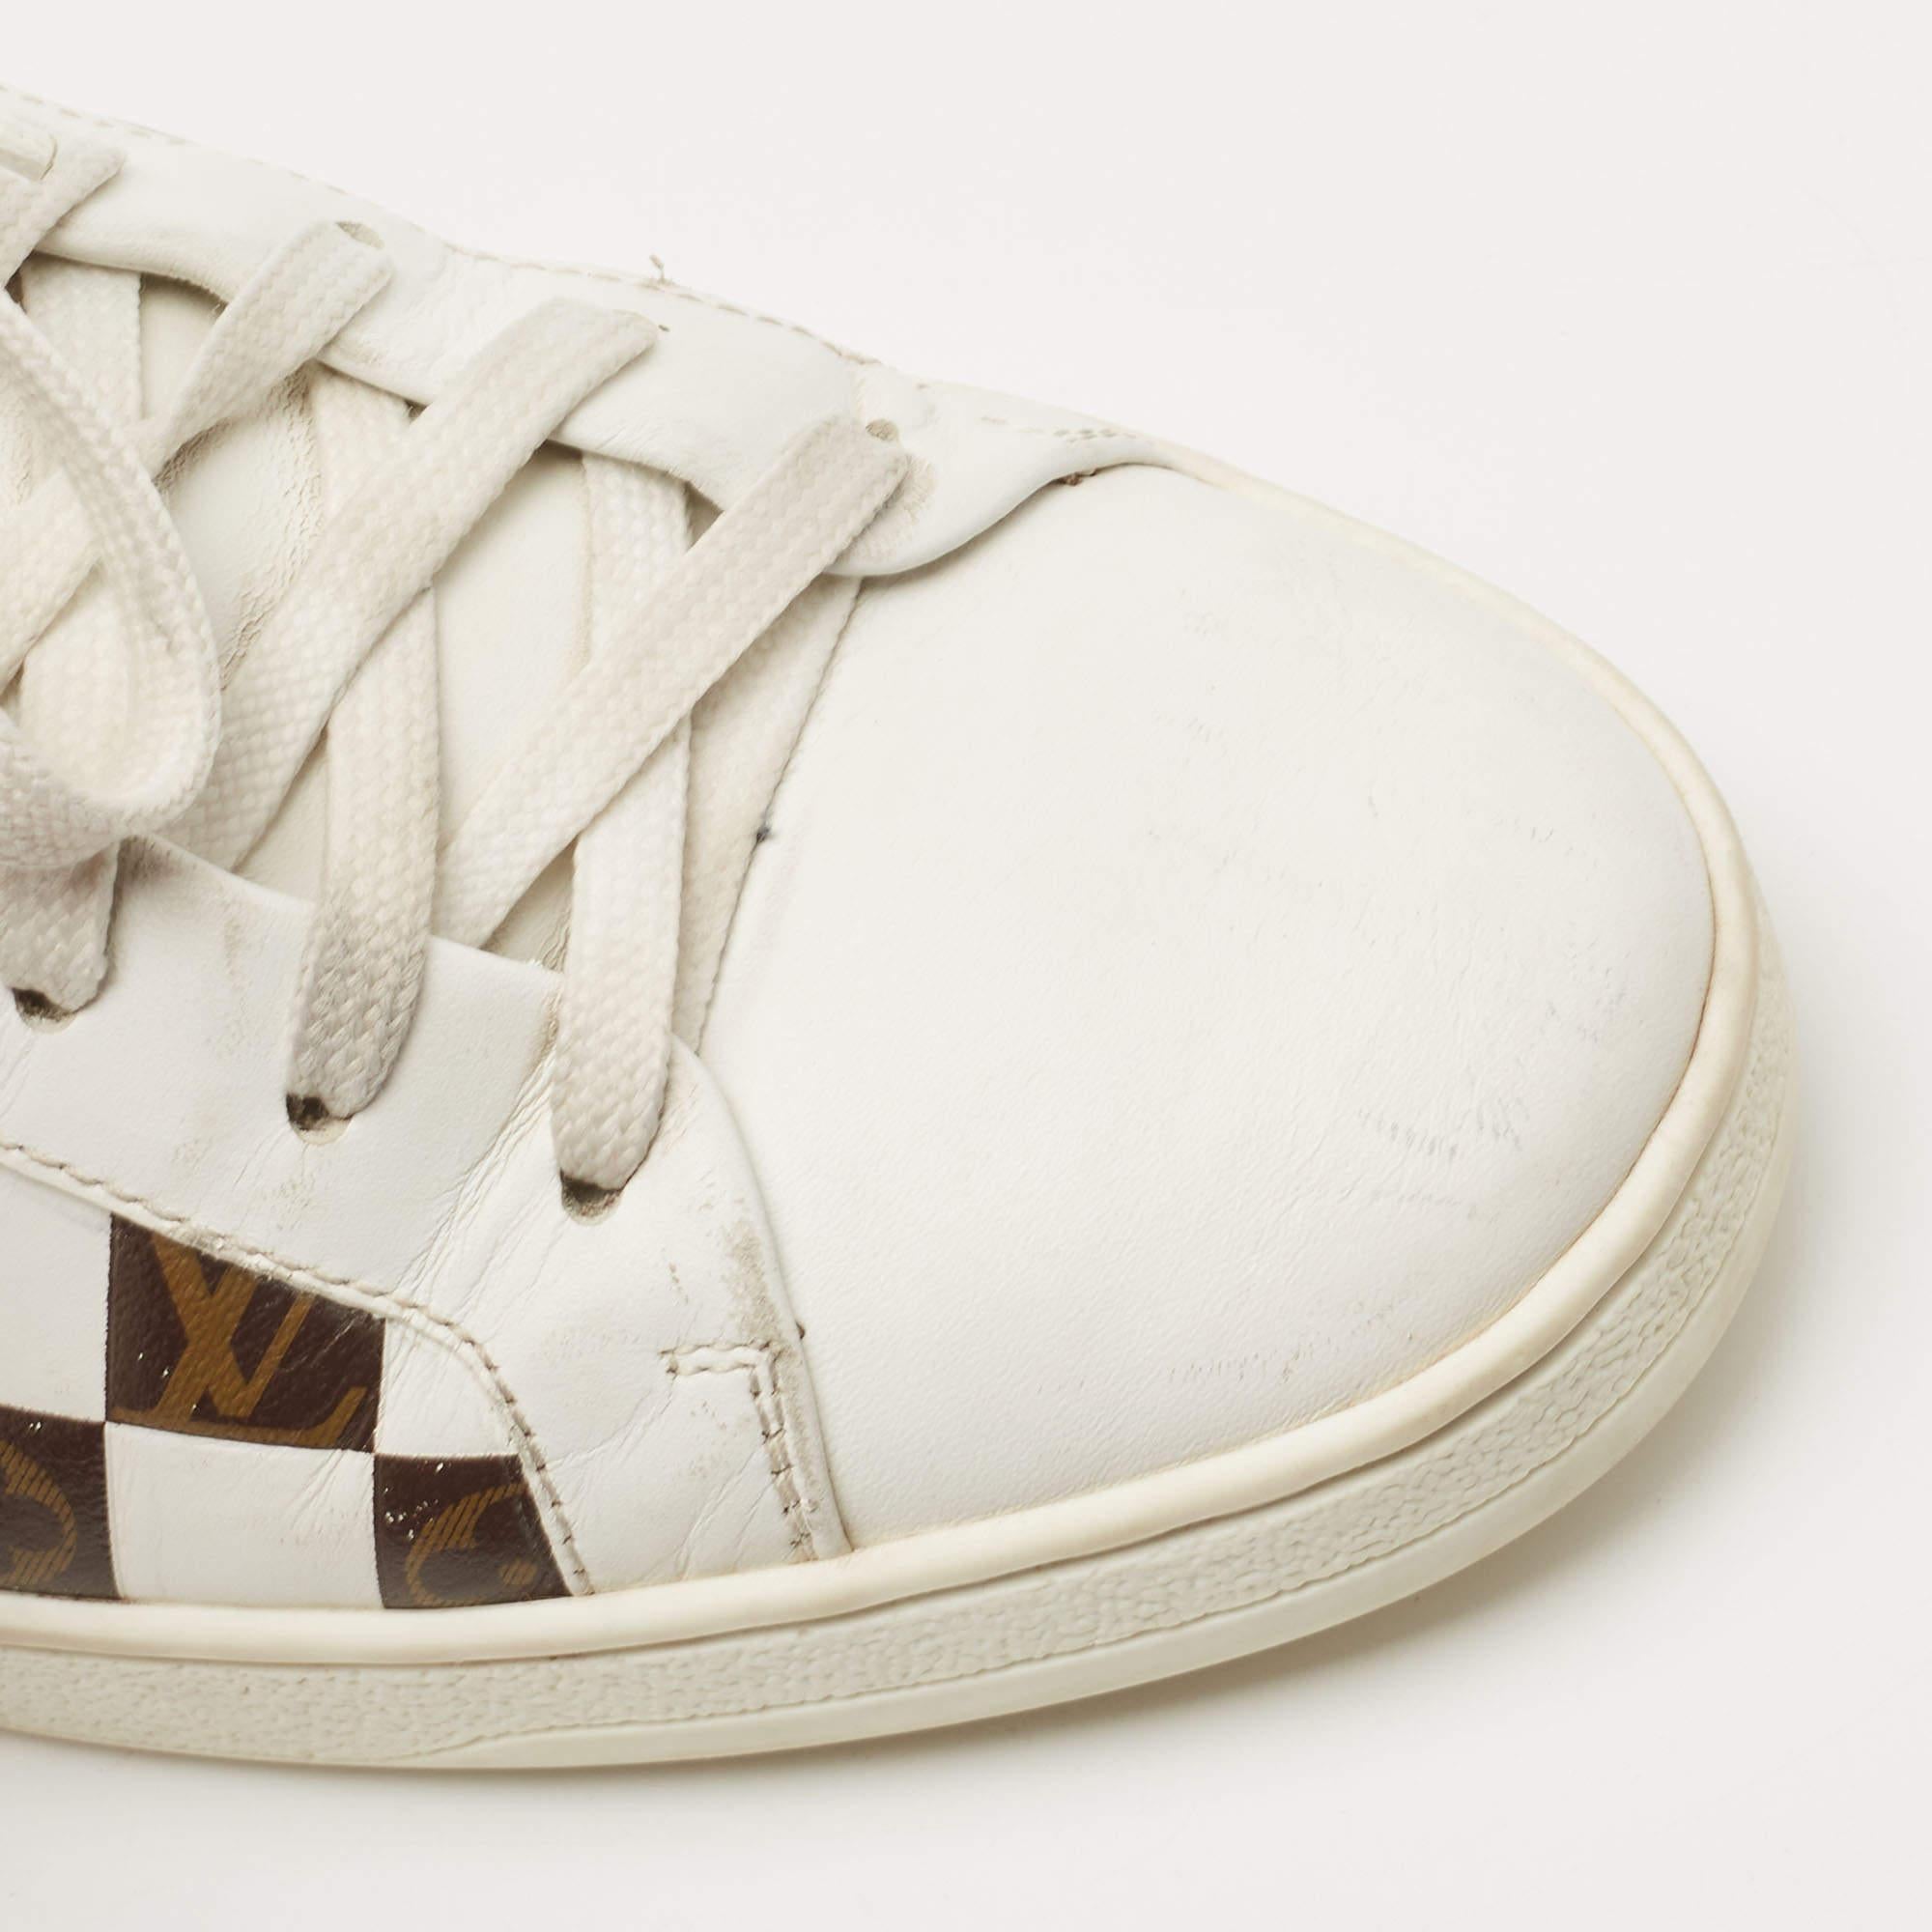 Louis Vuitton White/Brown Leather Monogram Printed Frontrow Sneakers Size 37.5 1